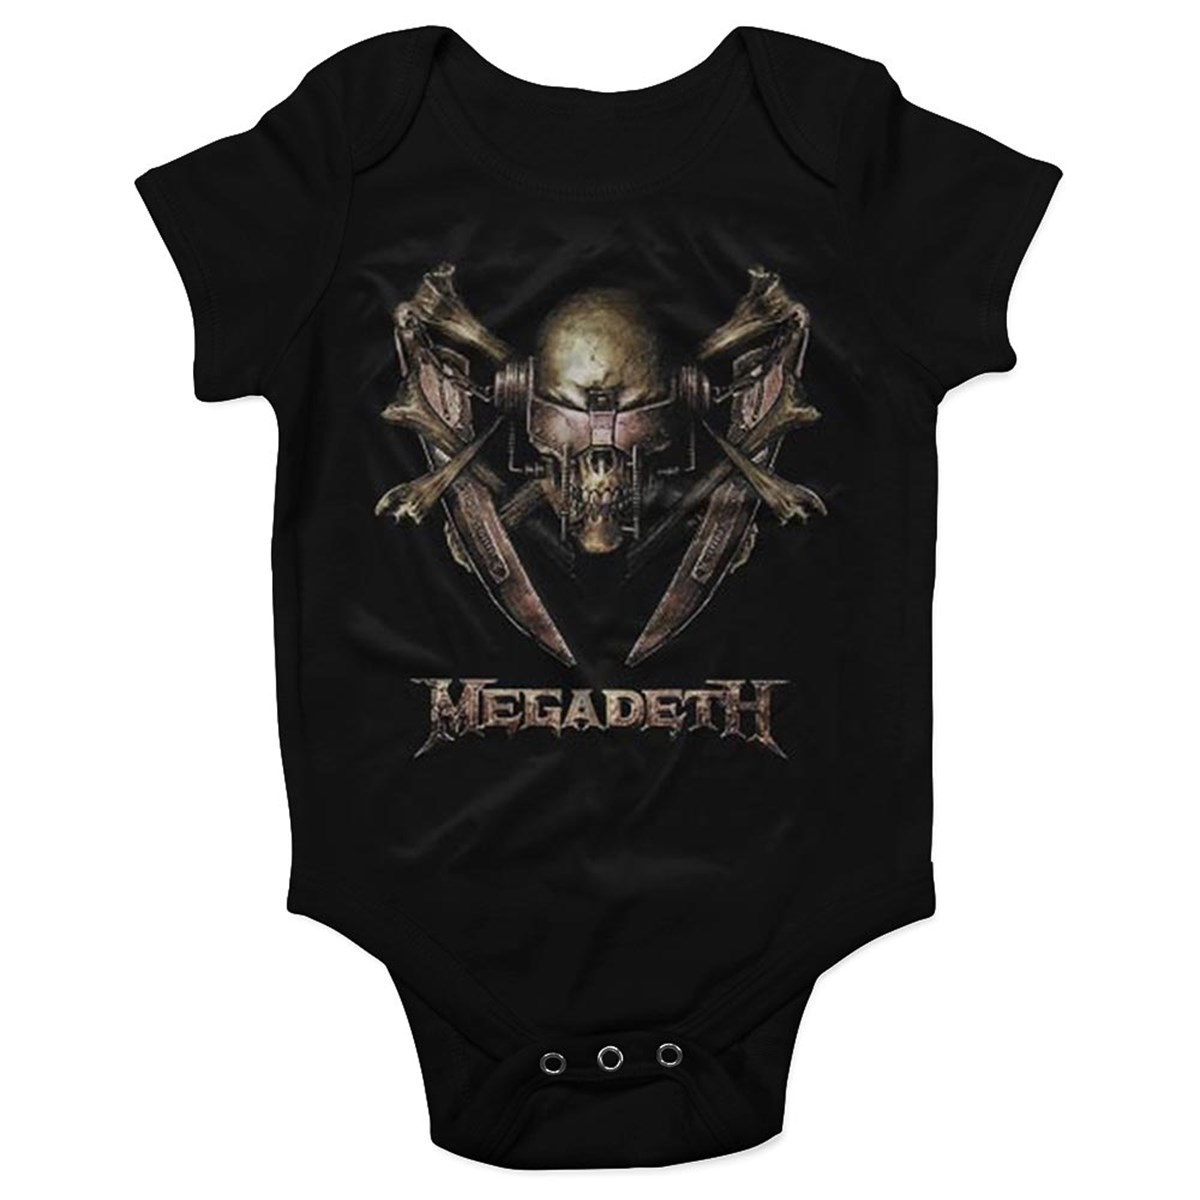 MEGADETH  Unisex Baby Romper Bodysuit~Black